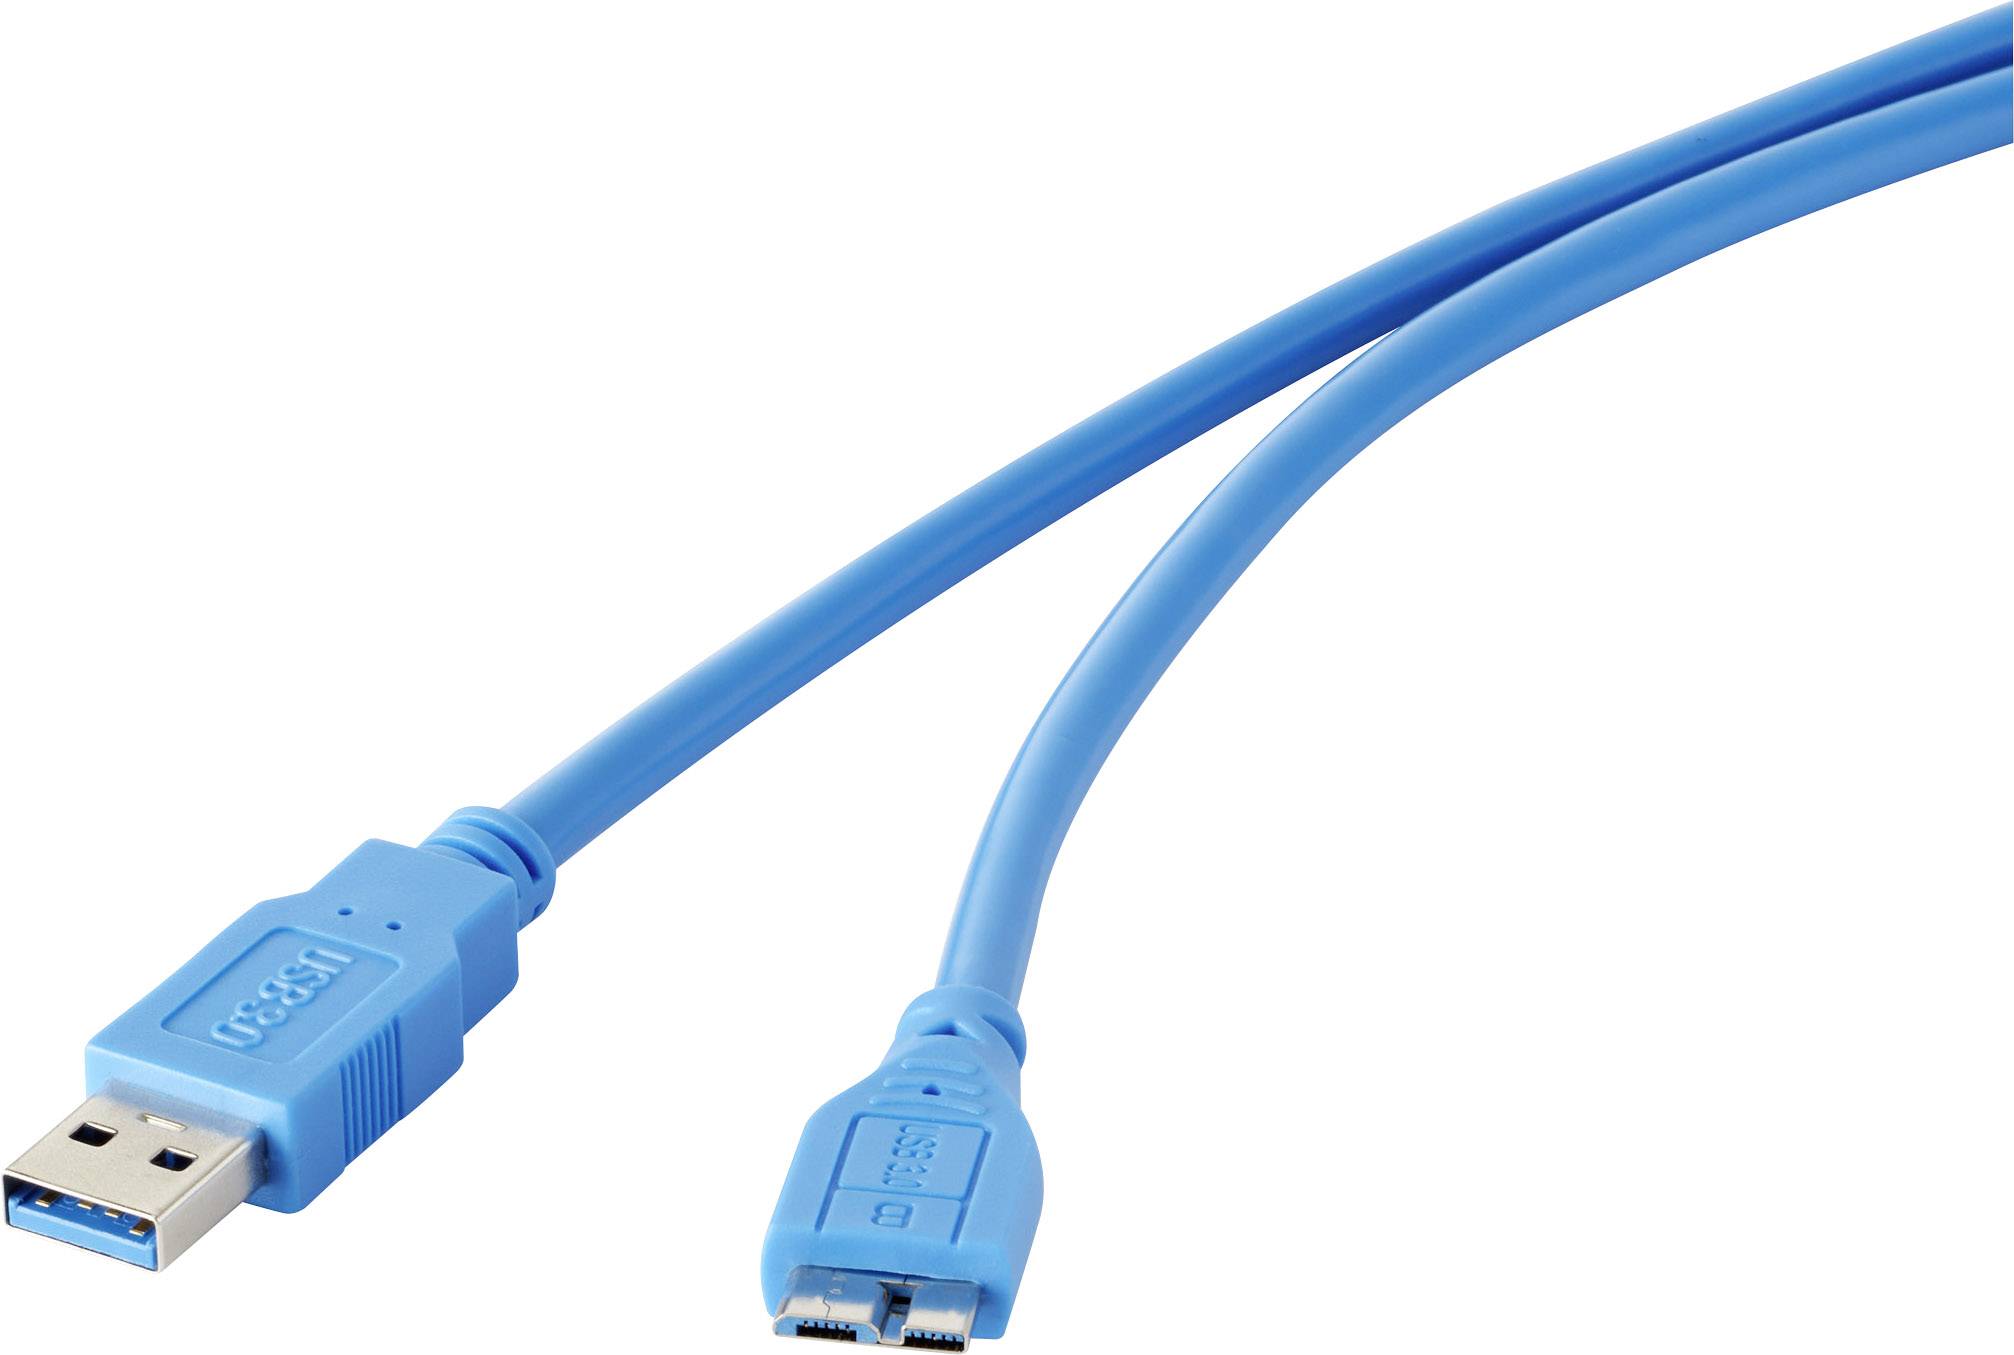 CONRAD USB 3.0 Kabel [1x USB 3.0 Stecker A - 1x USB 3.0 Stecker Micro B] 0.3 m Blau vergoldete Steck